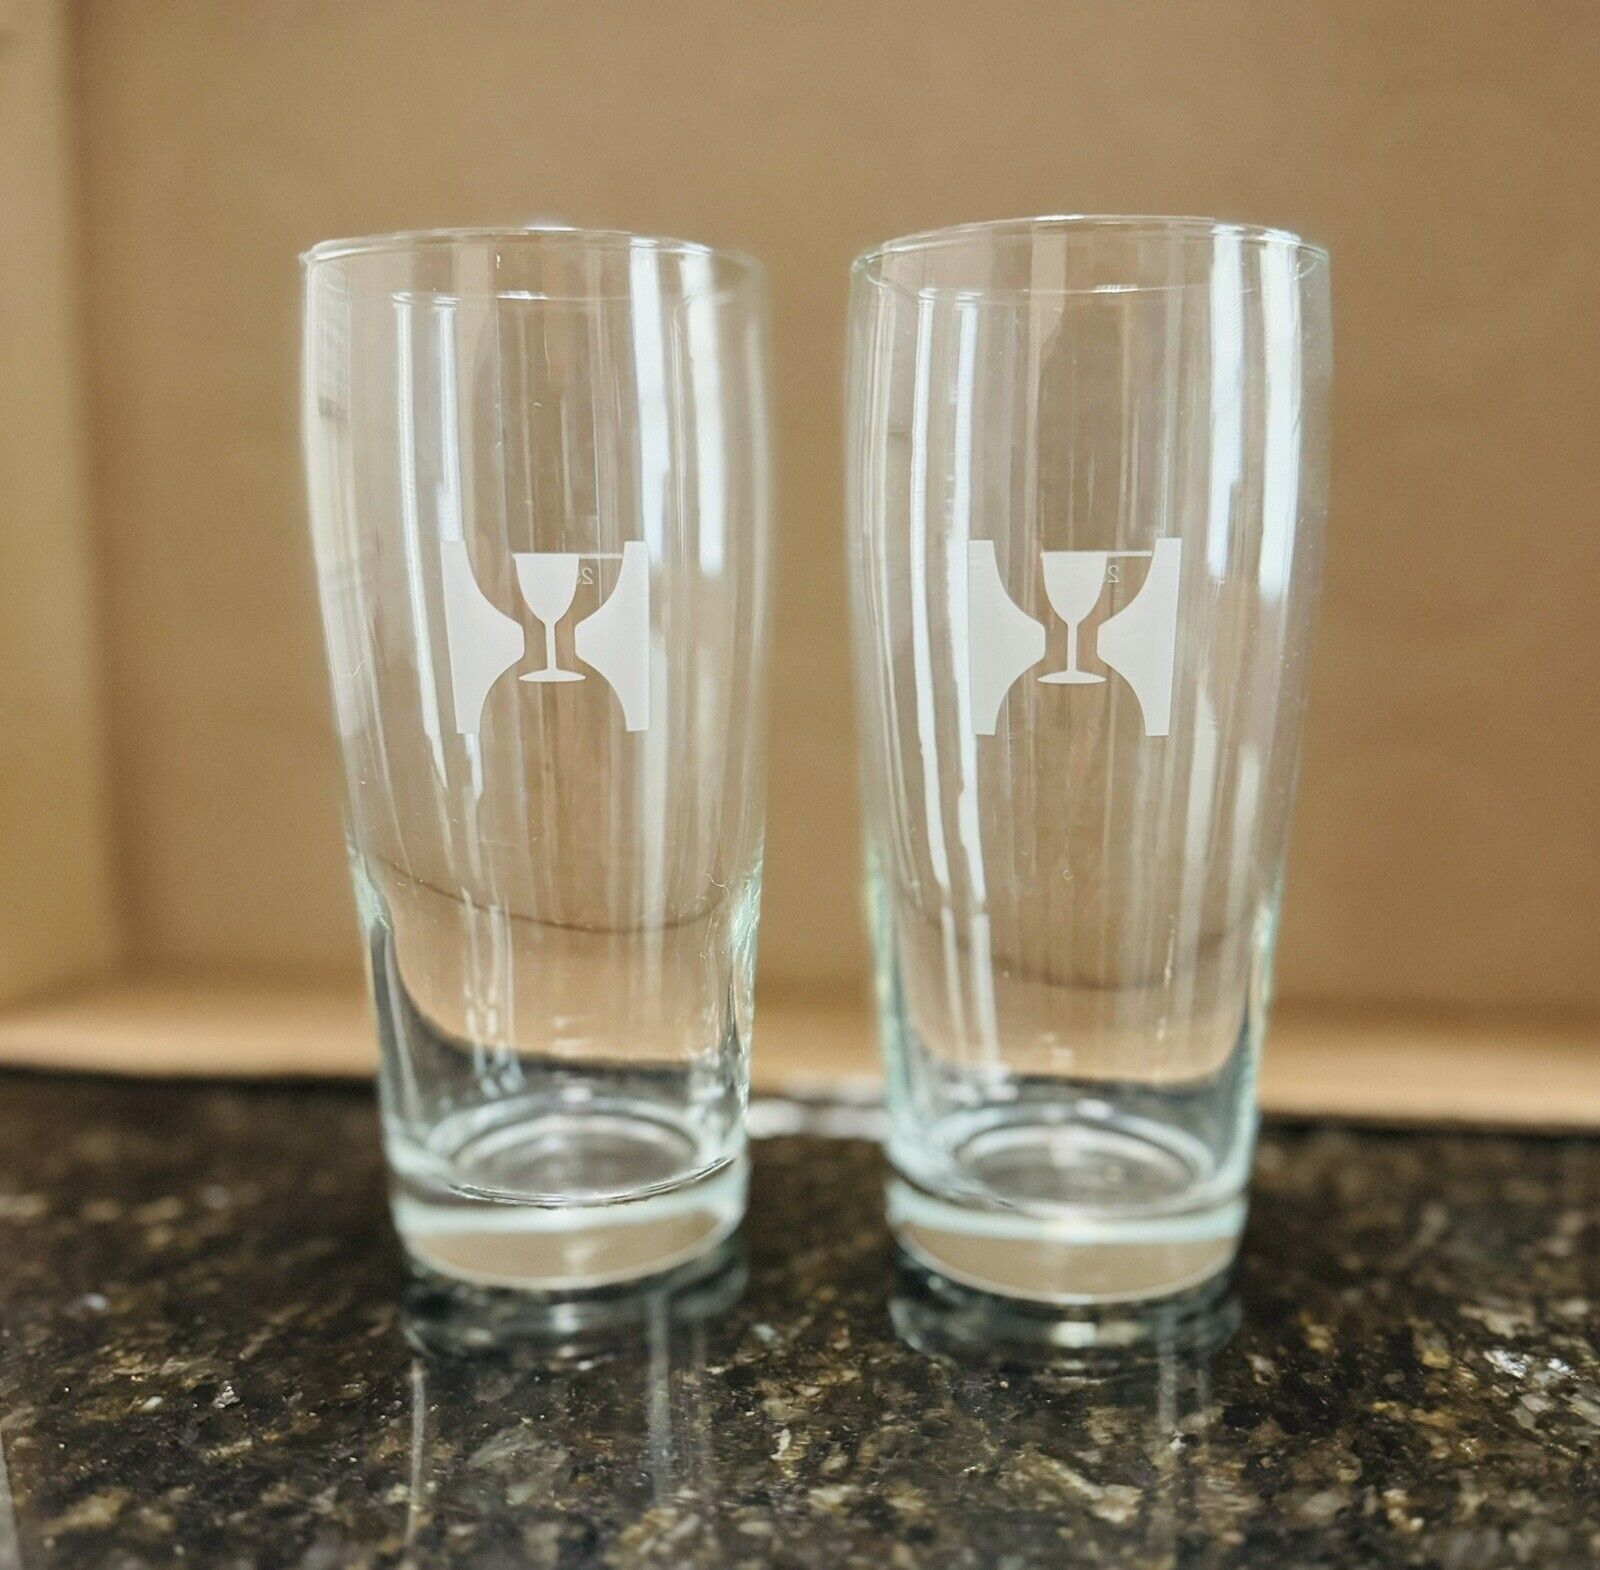 Hill Farmstead Glassware, Pair Of 12oz Willie Belcher Glasses